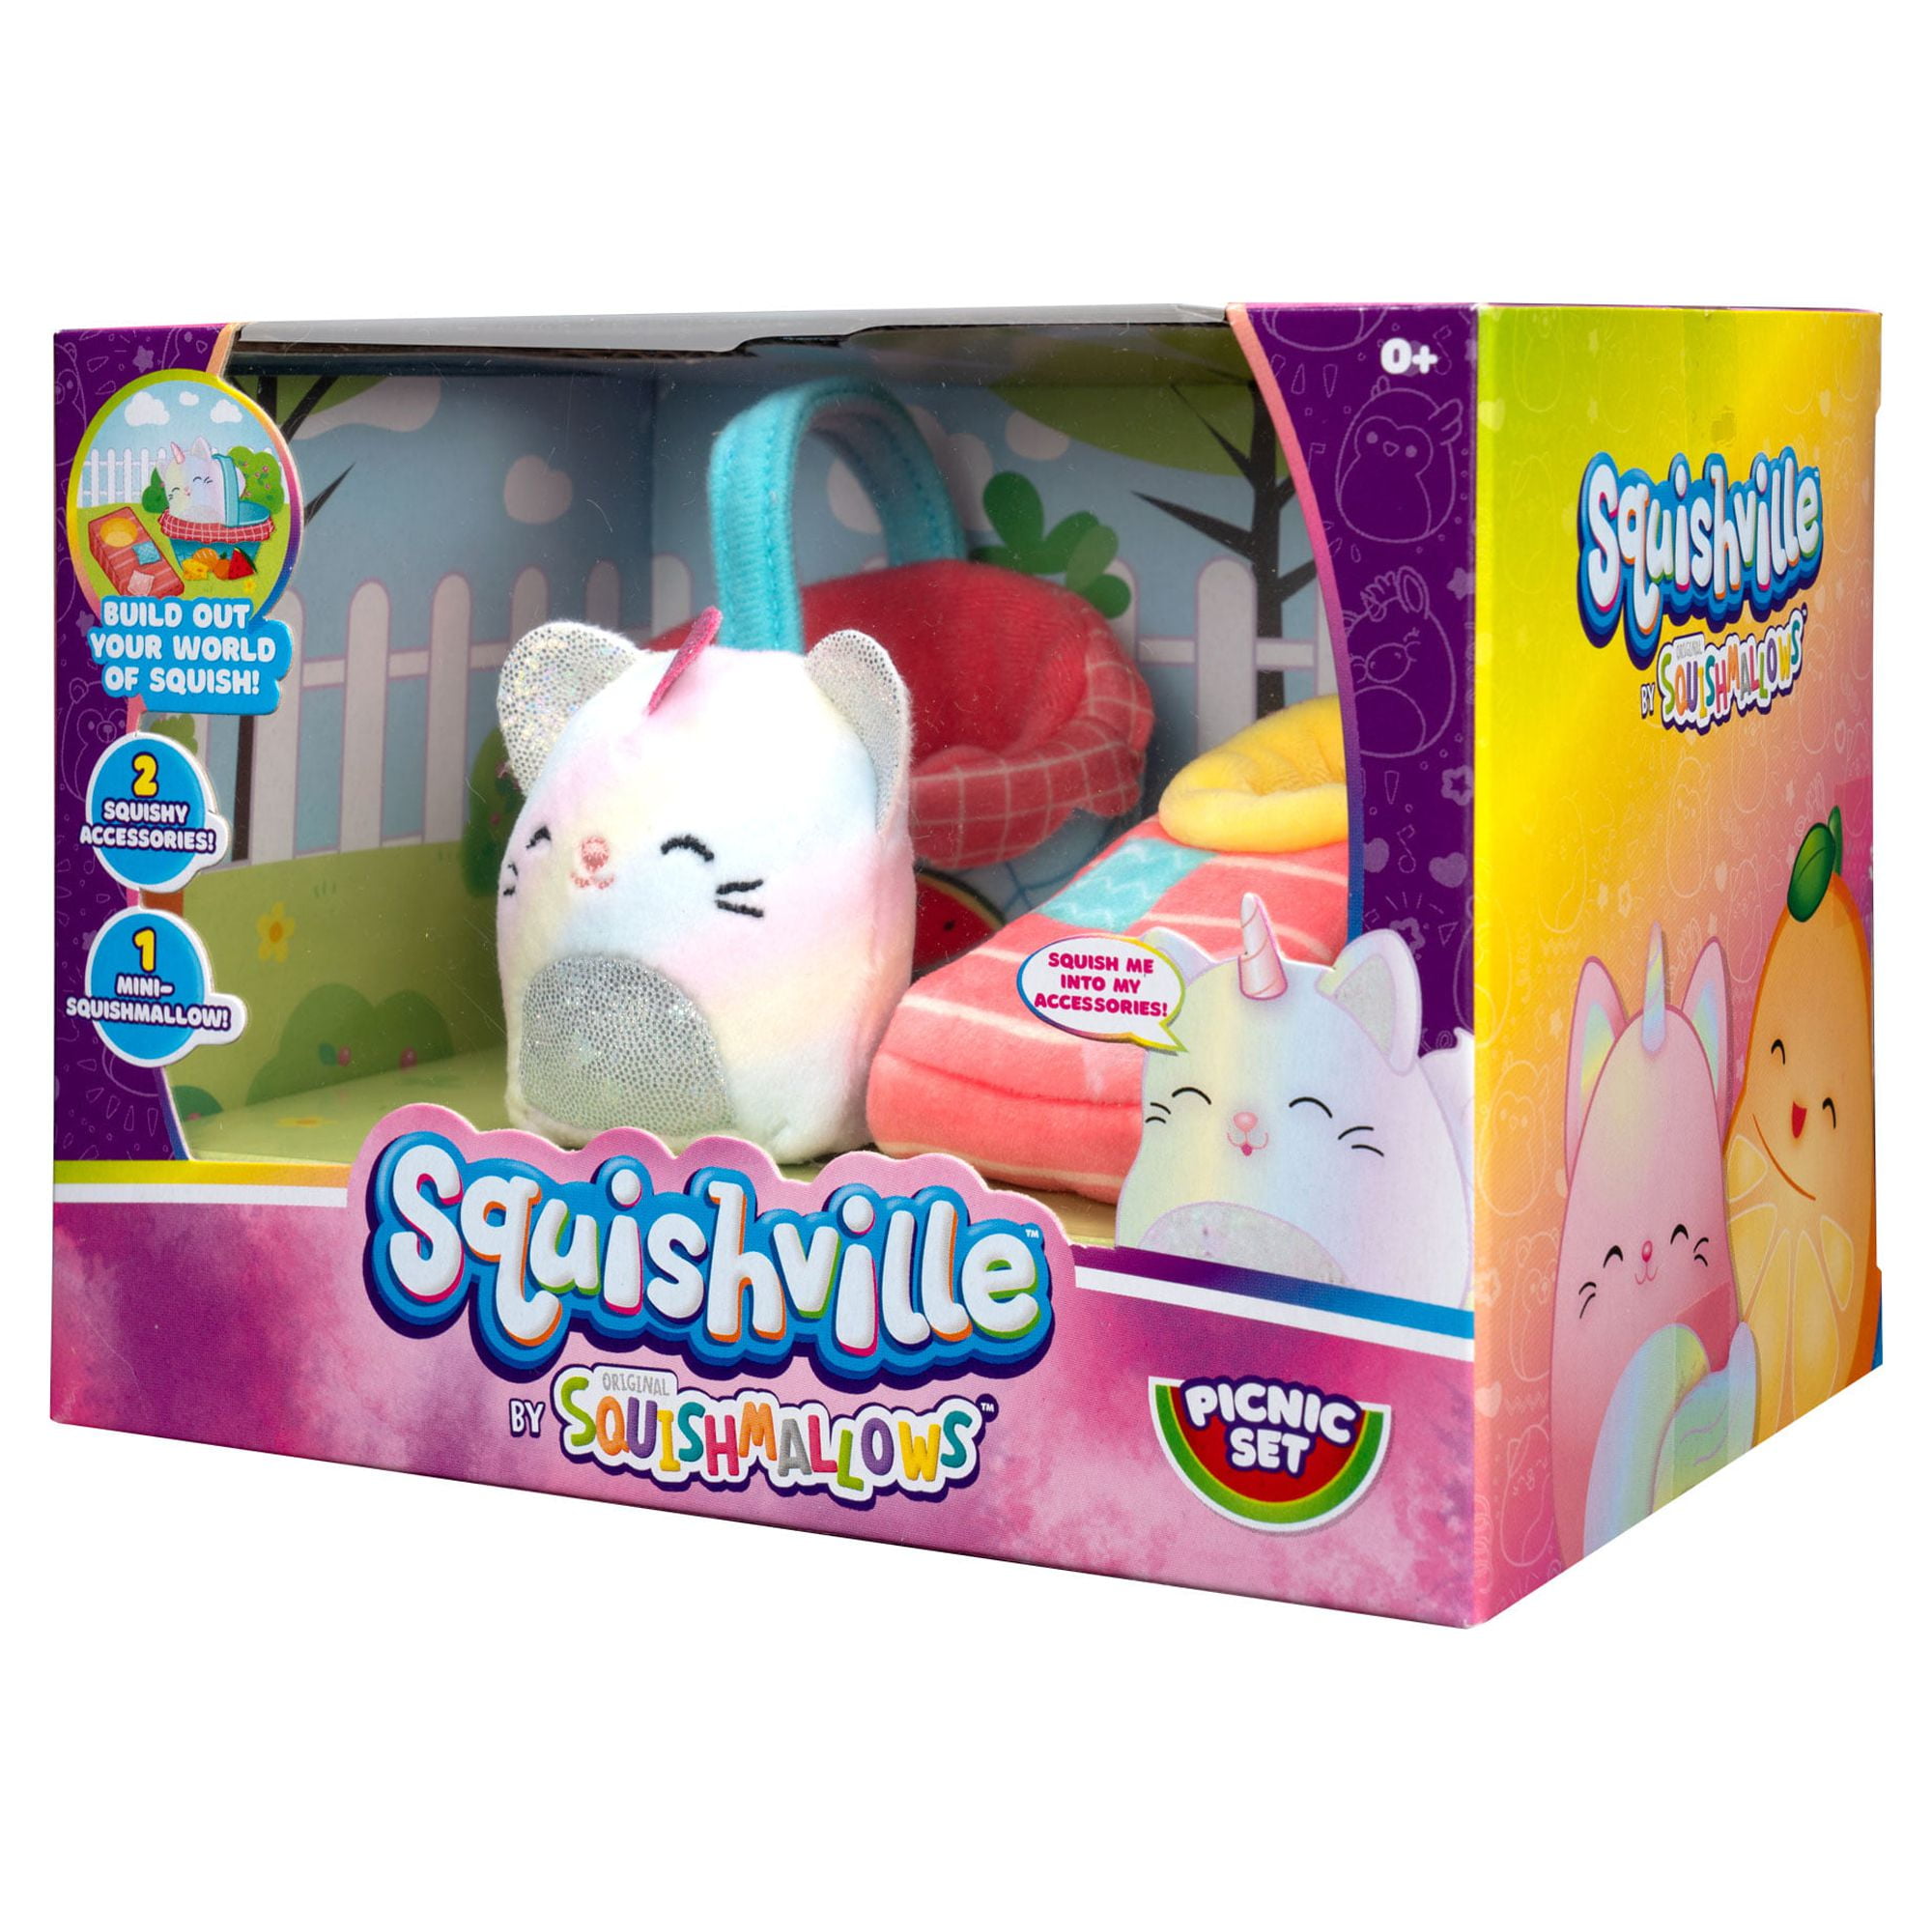 Squishmallows Squishville Gamer Garage Plush Playset